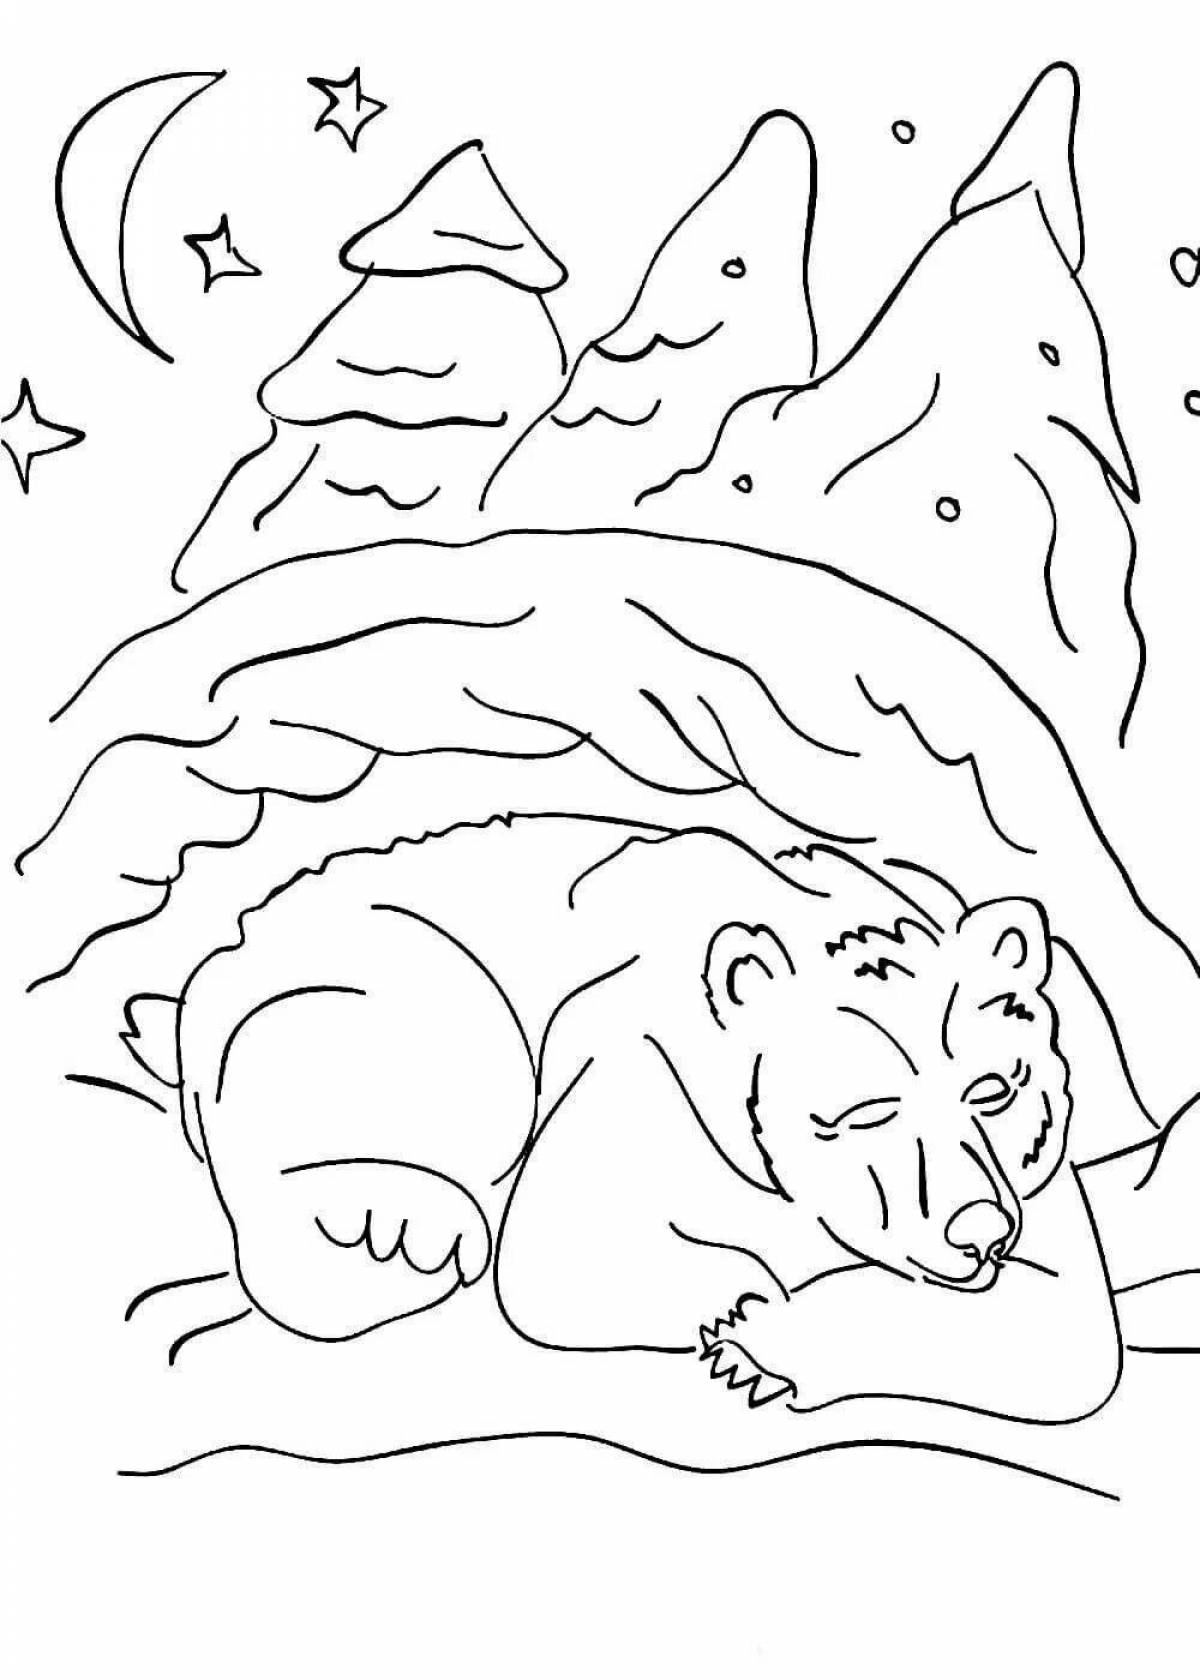 Coloring page cute teddy bear sleeps in a den